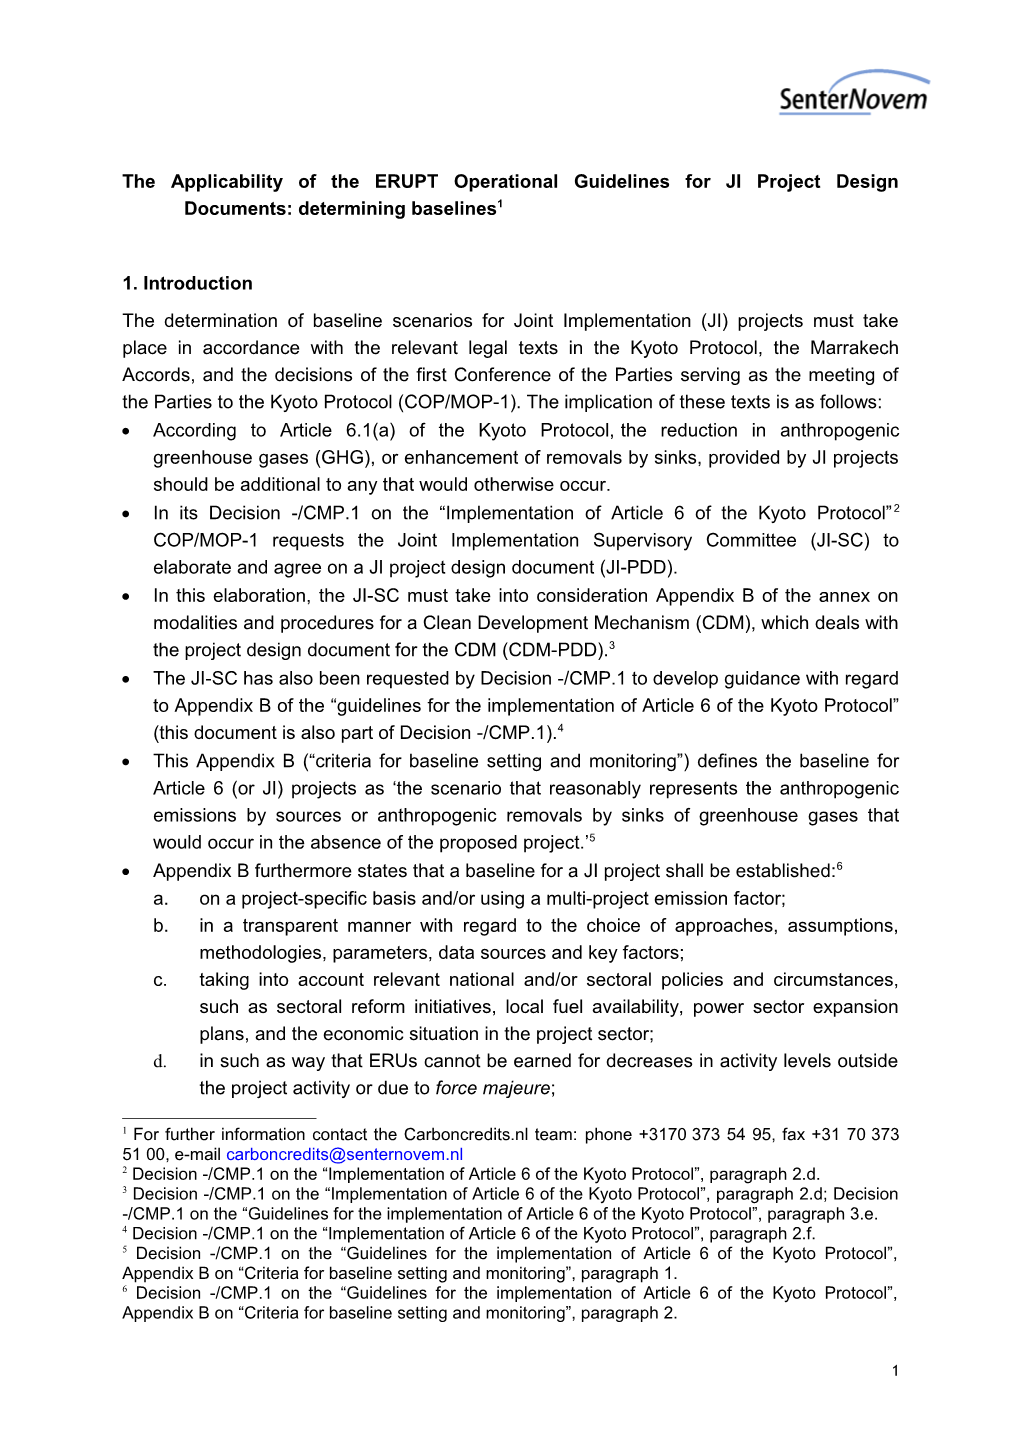 Applicability of the ERUPT Guidelines for JI Pdds - Senternovem - 2006 02 28